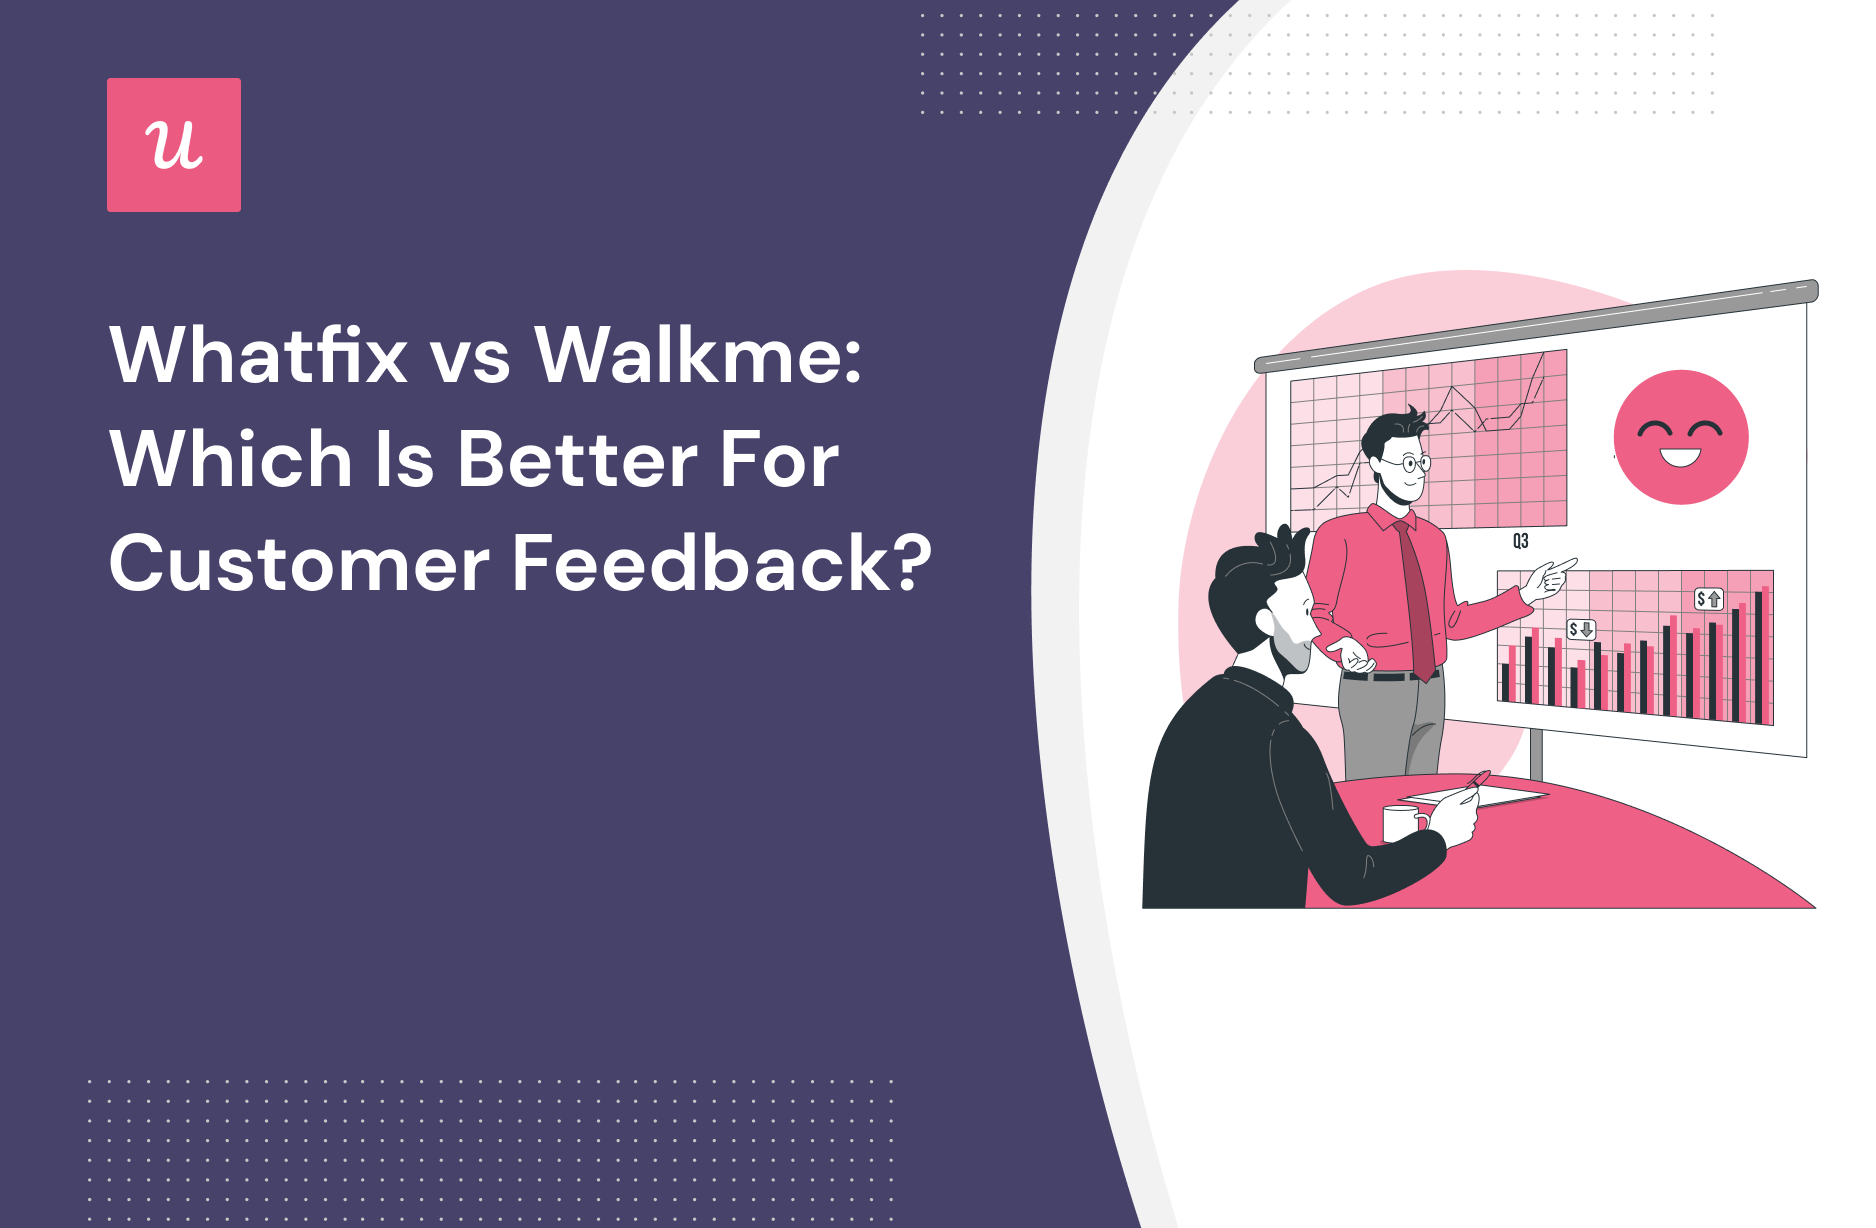 Whatfix vs Walkme: Which is Better for Customer Feedback?